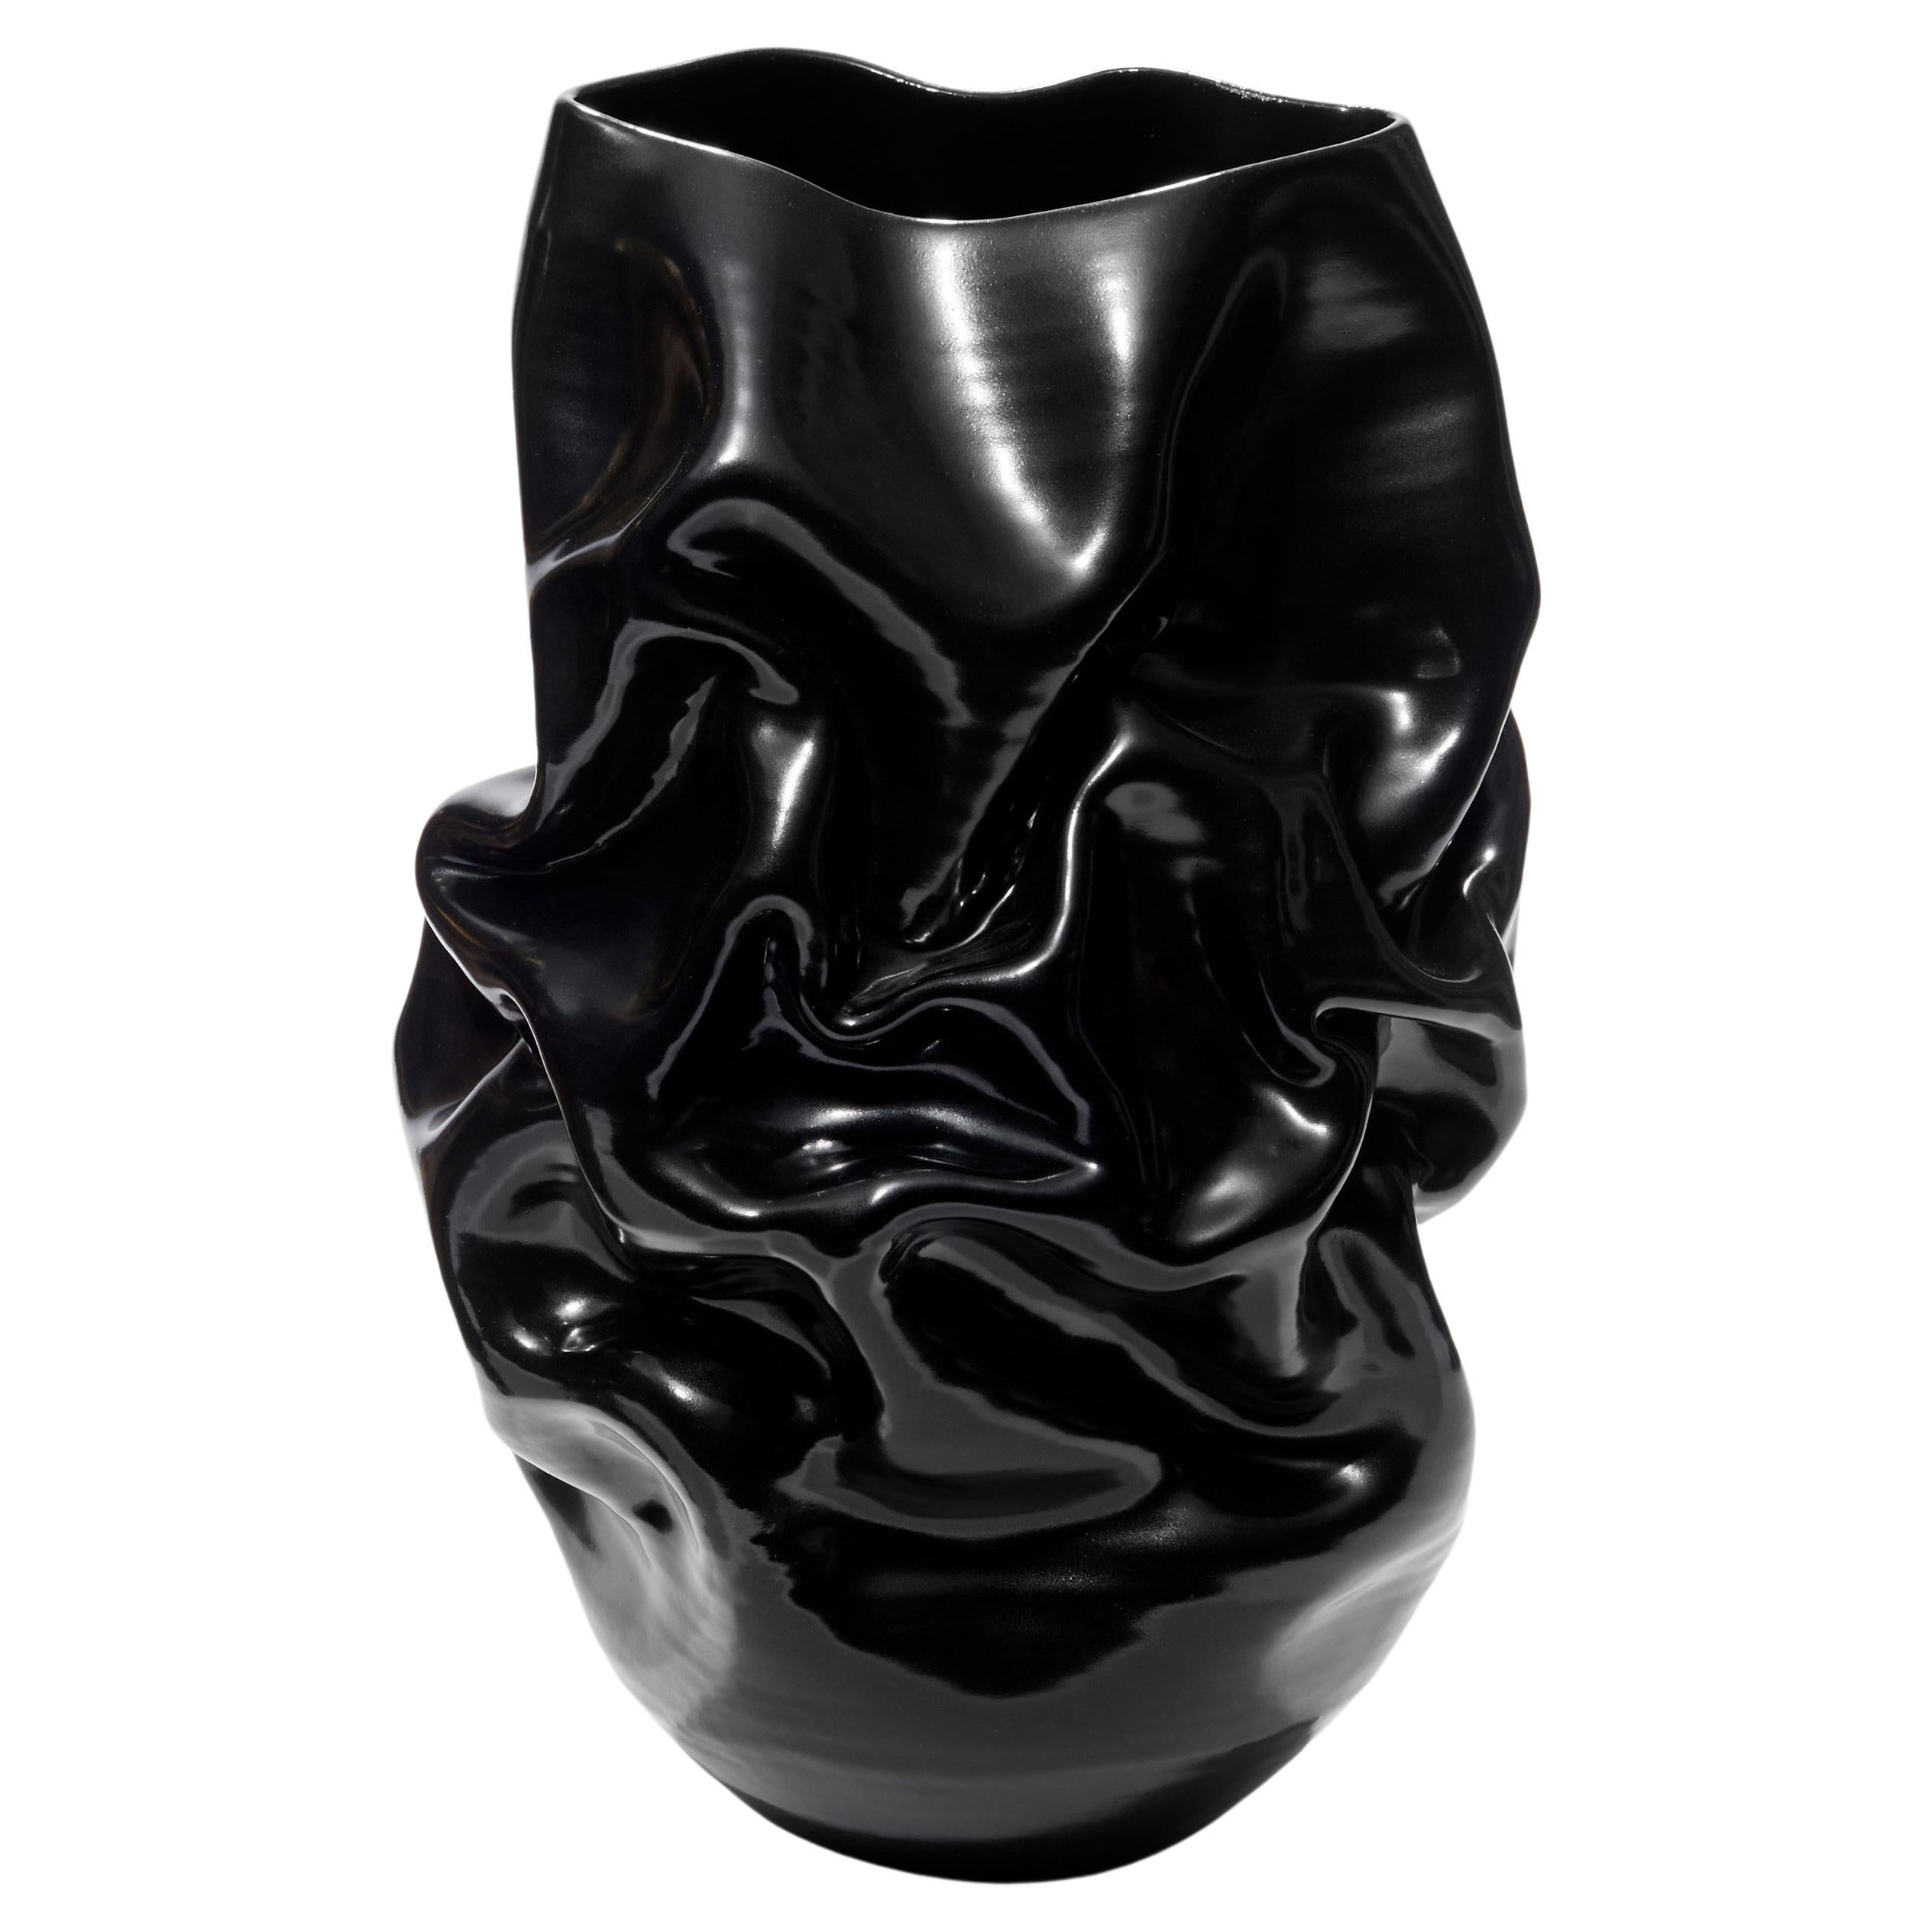 Tall Black Crumpled Form No 94, a Ceramic Vessel by Nicholas Arroyave-Portela